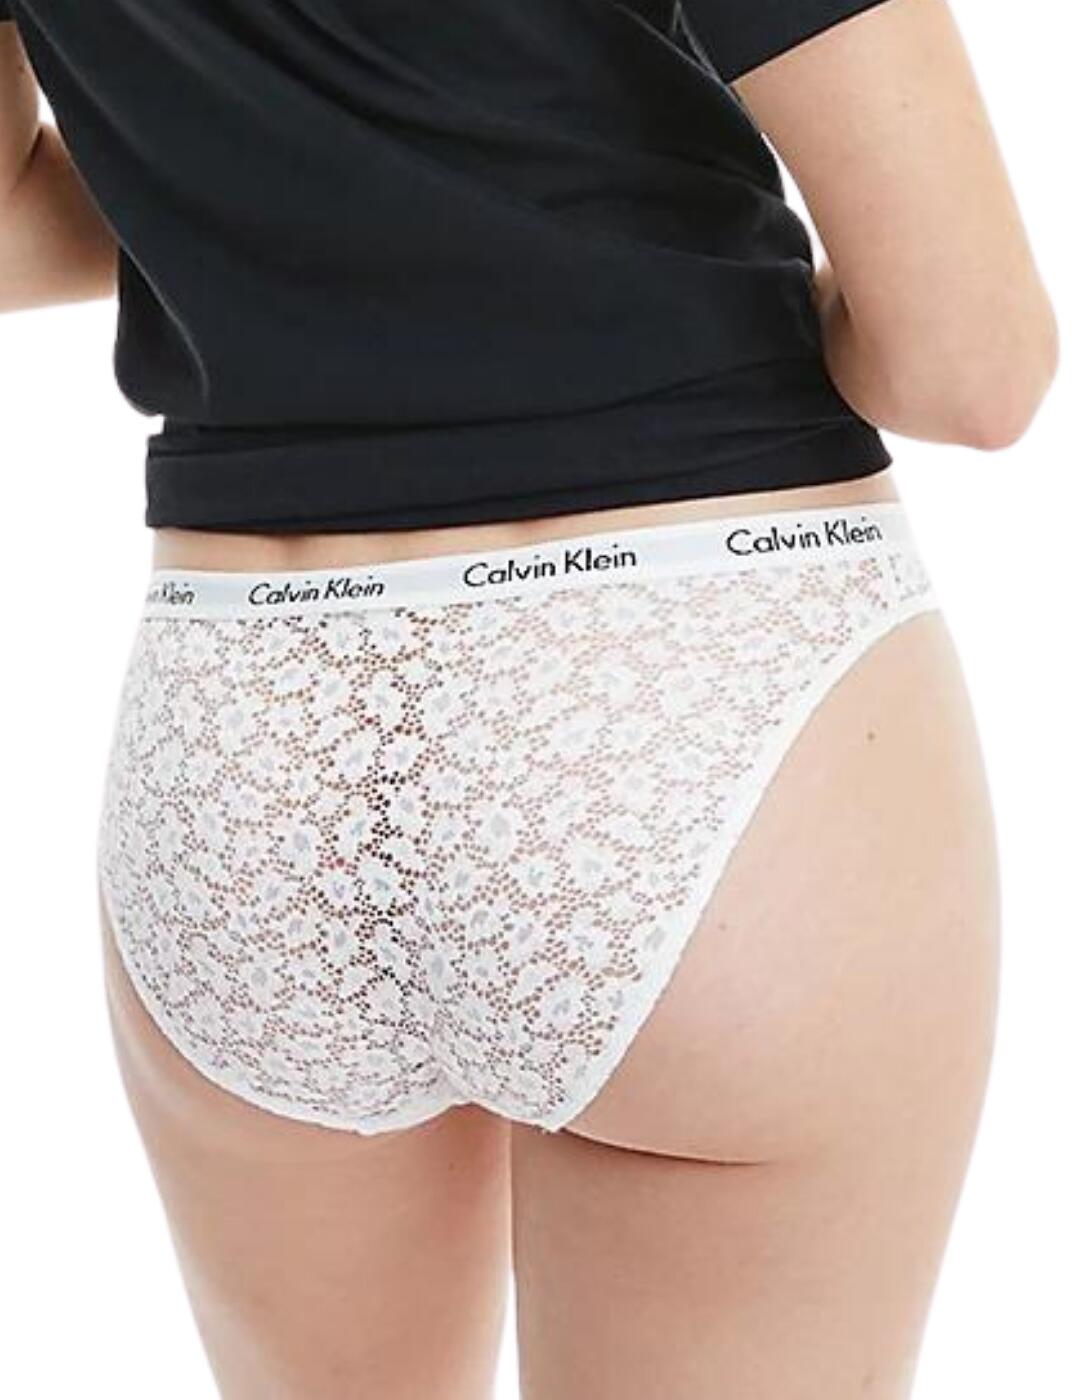 Calvin Klein Carousel Bikini Style Brief 3 Pack - Belle Lingerie | Calvin  Klein Carousel Bikini 3pck - Belle Lingerie